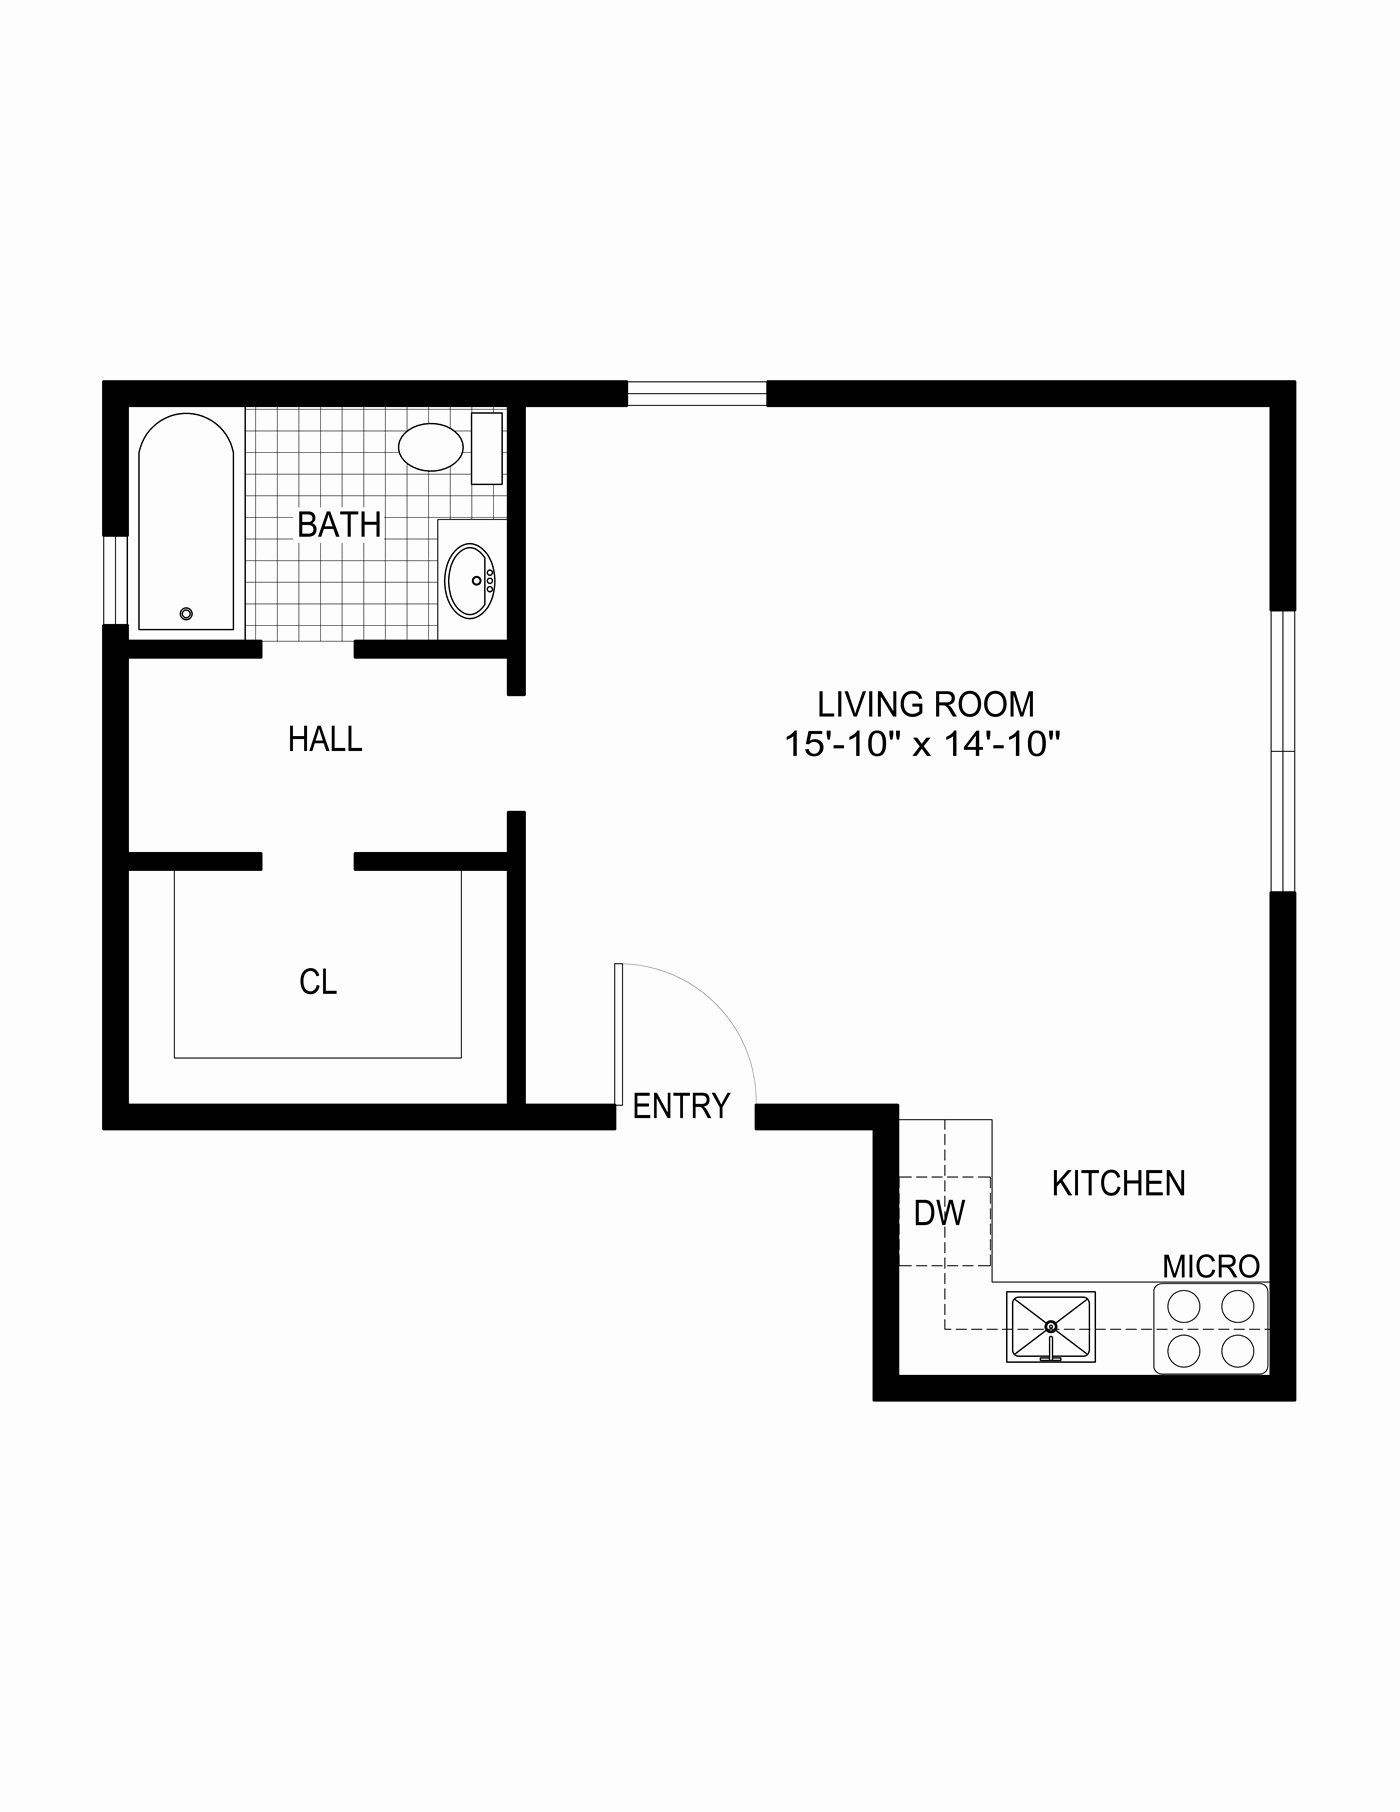 Floor Plan Templates Free Elegant 23 Simple Floor Layout Template Ideas Home Plans